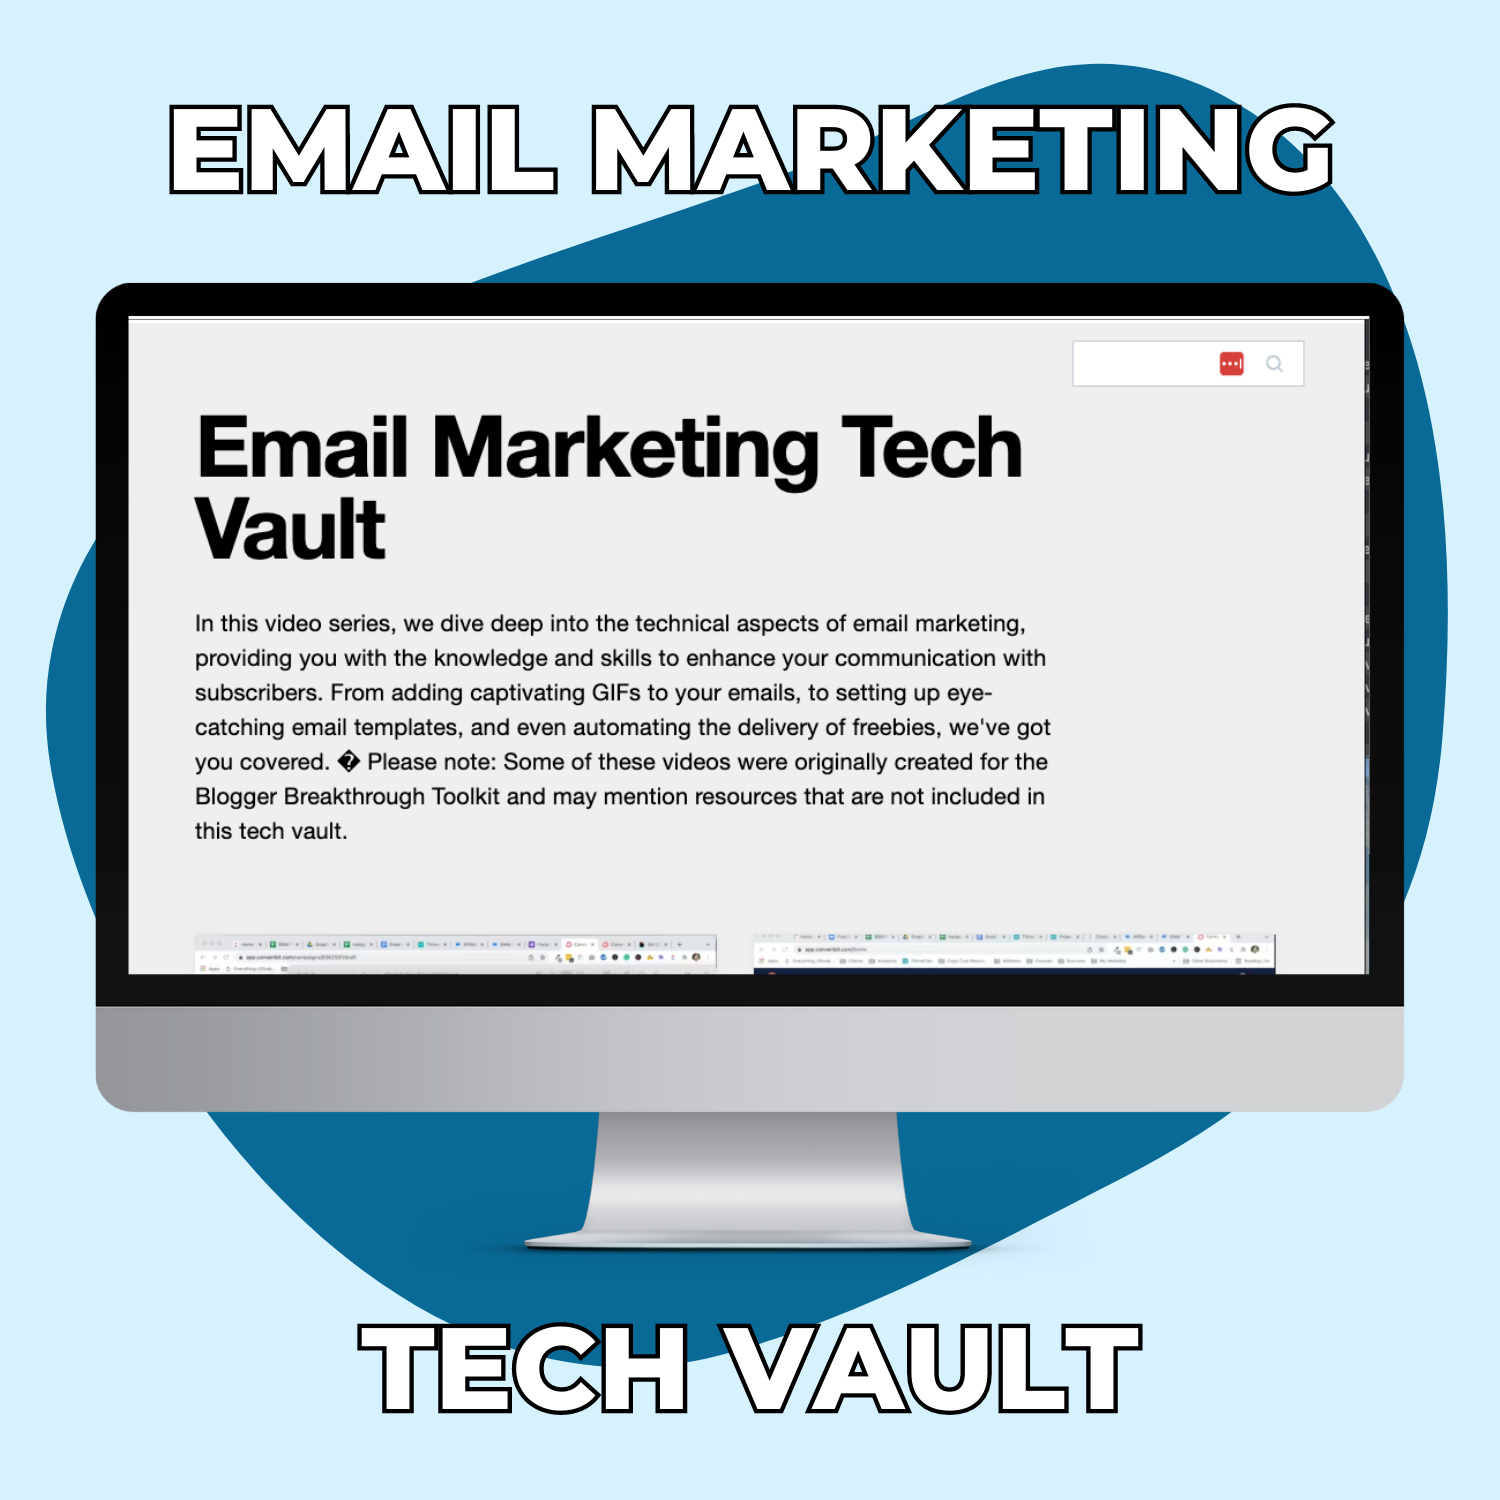 Email Marketing Tech Vault